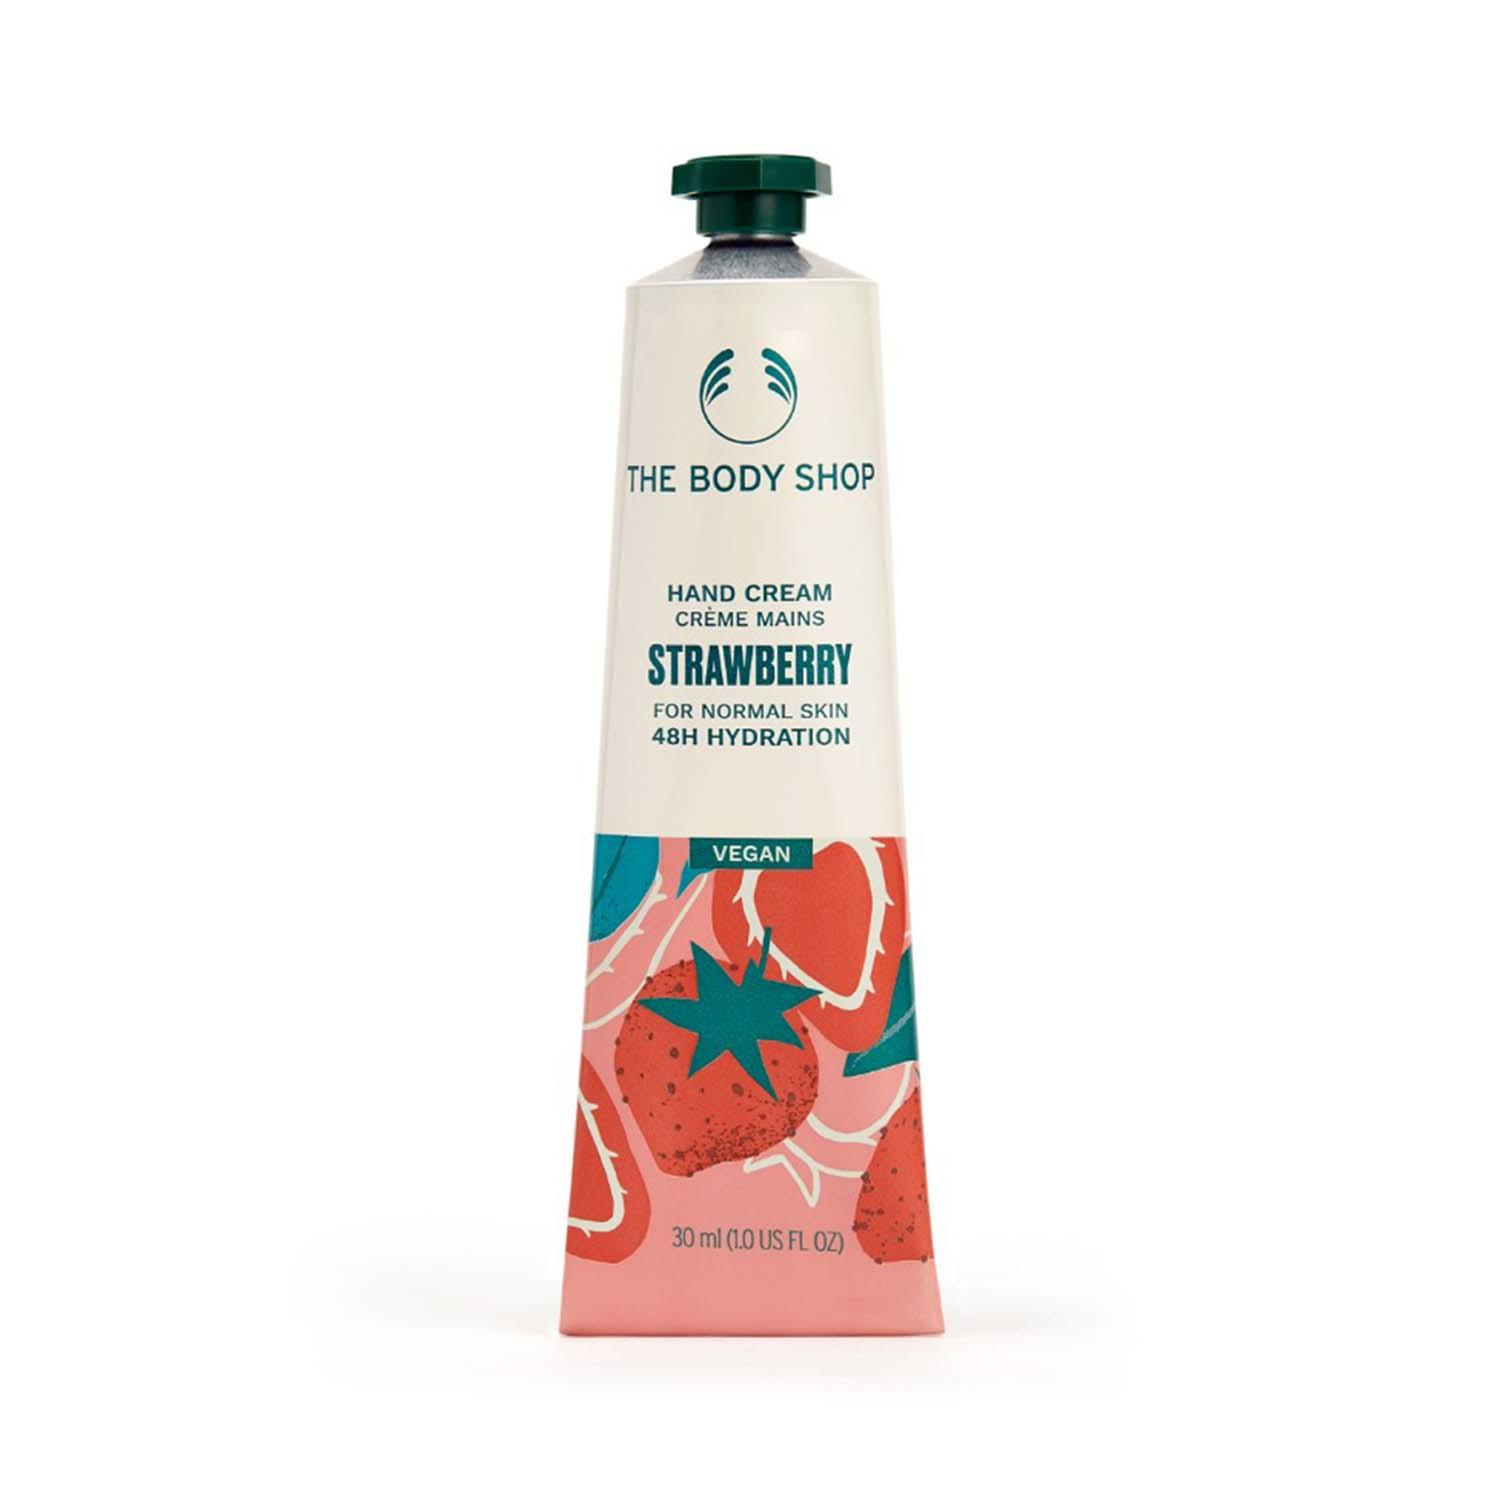 The Body Shop | The Body Shop Strawberry Hand Cream (30ml)